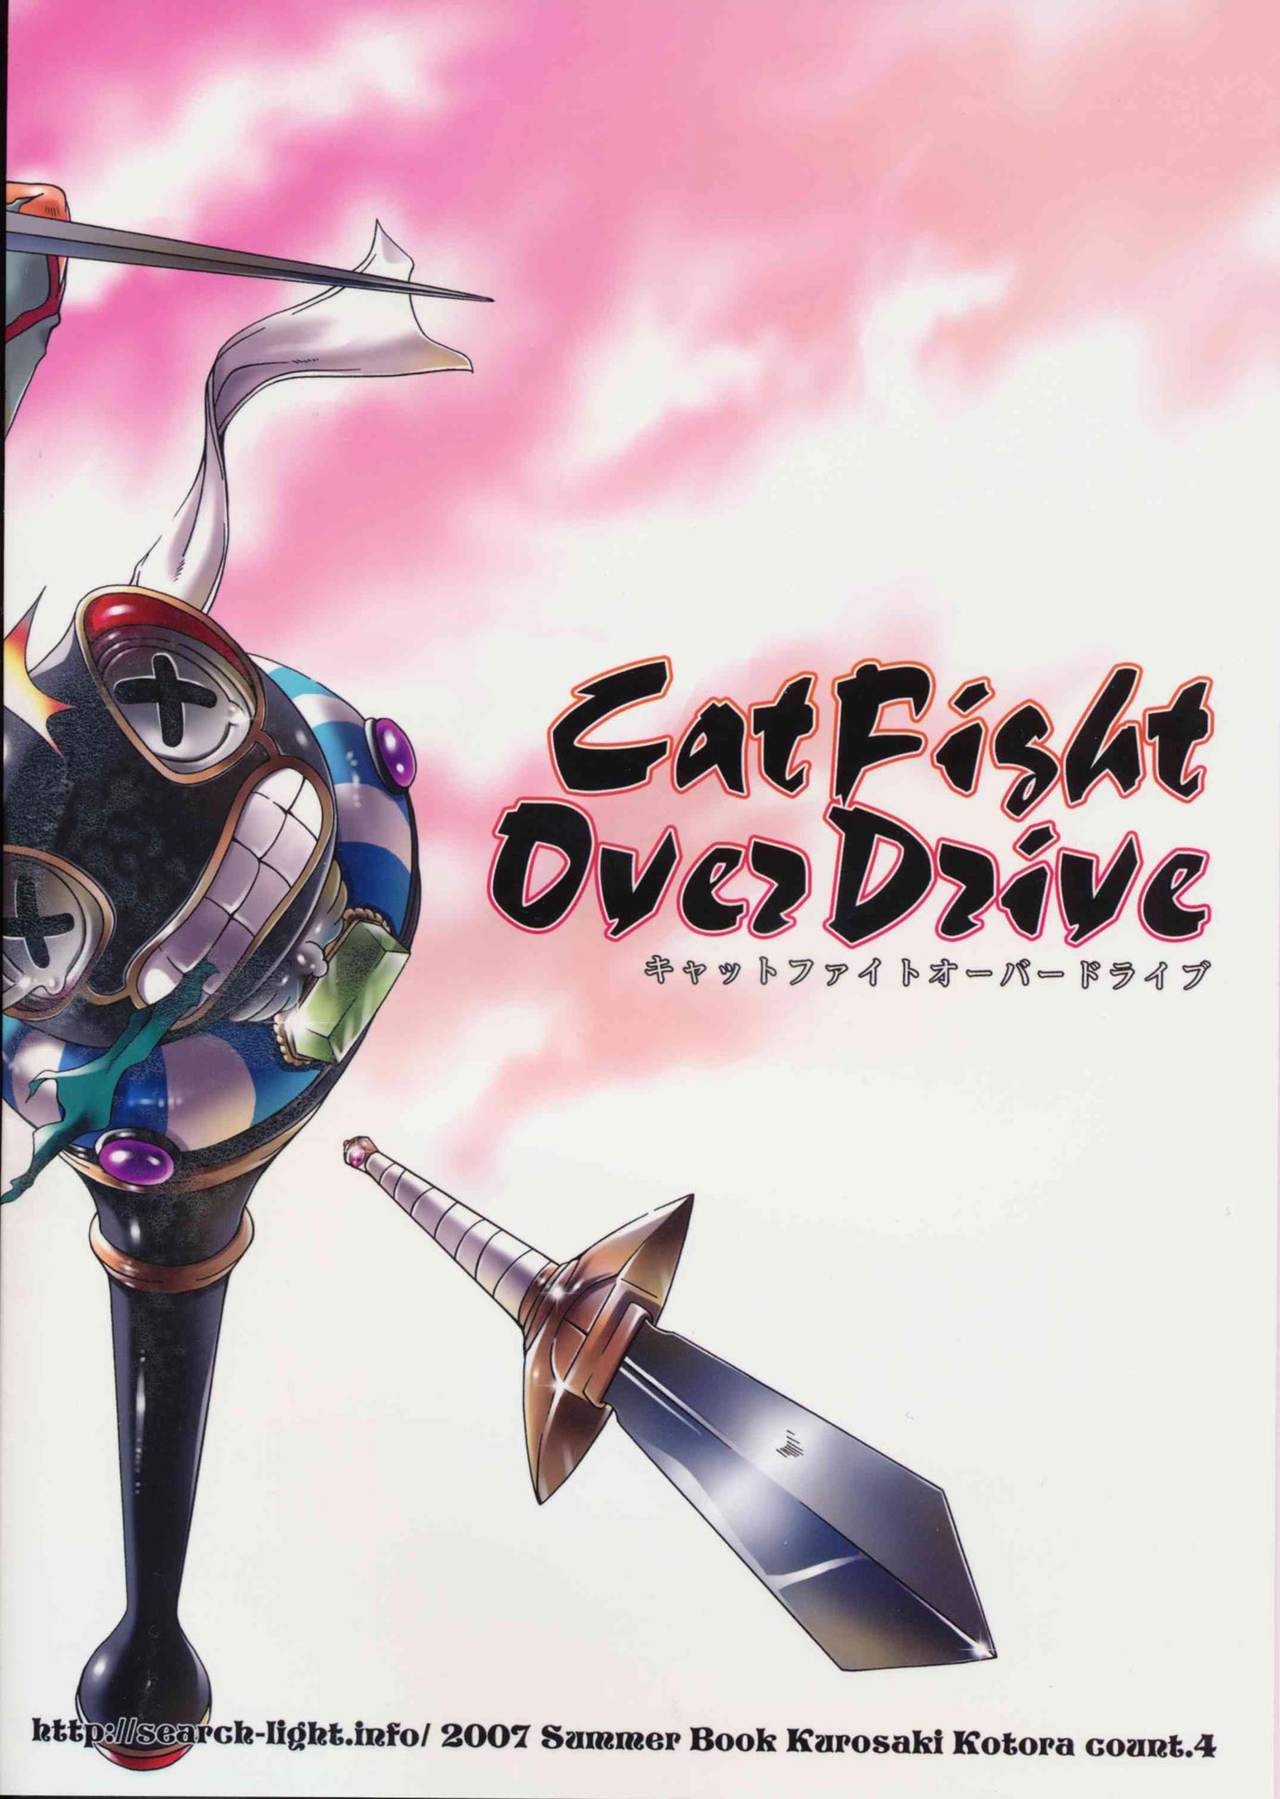 Cat Fight Over Drive numero d'image 21